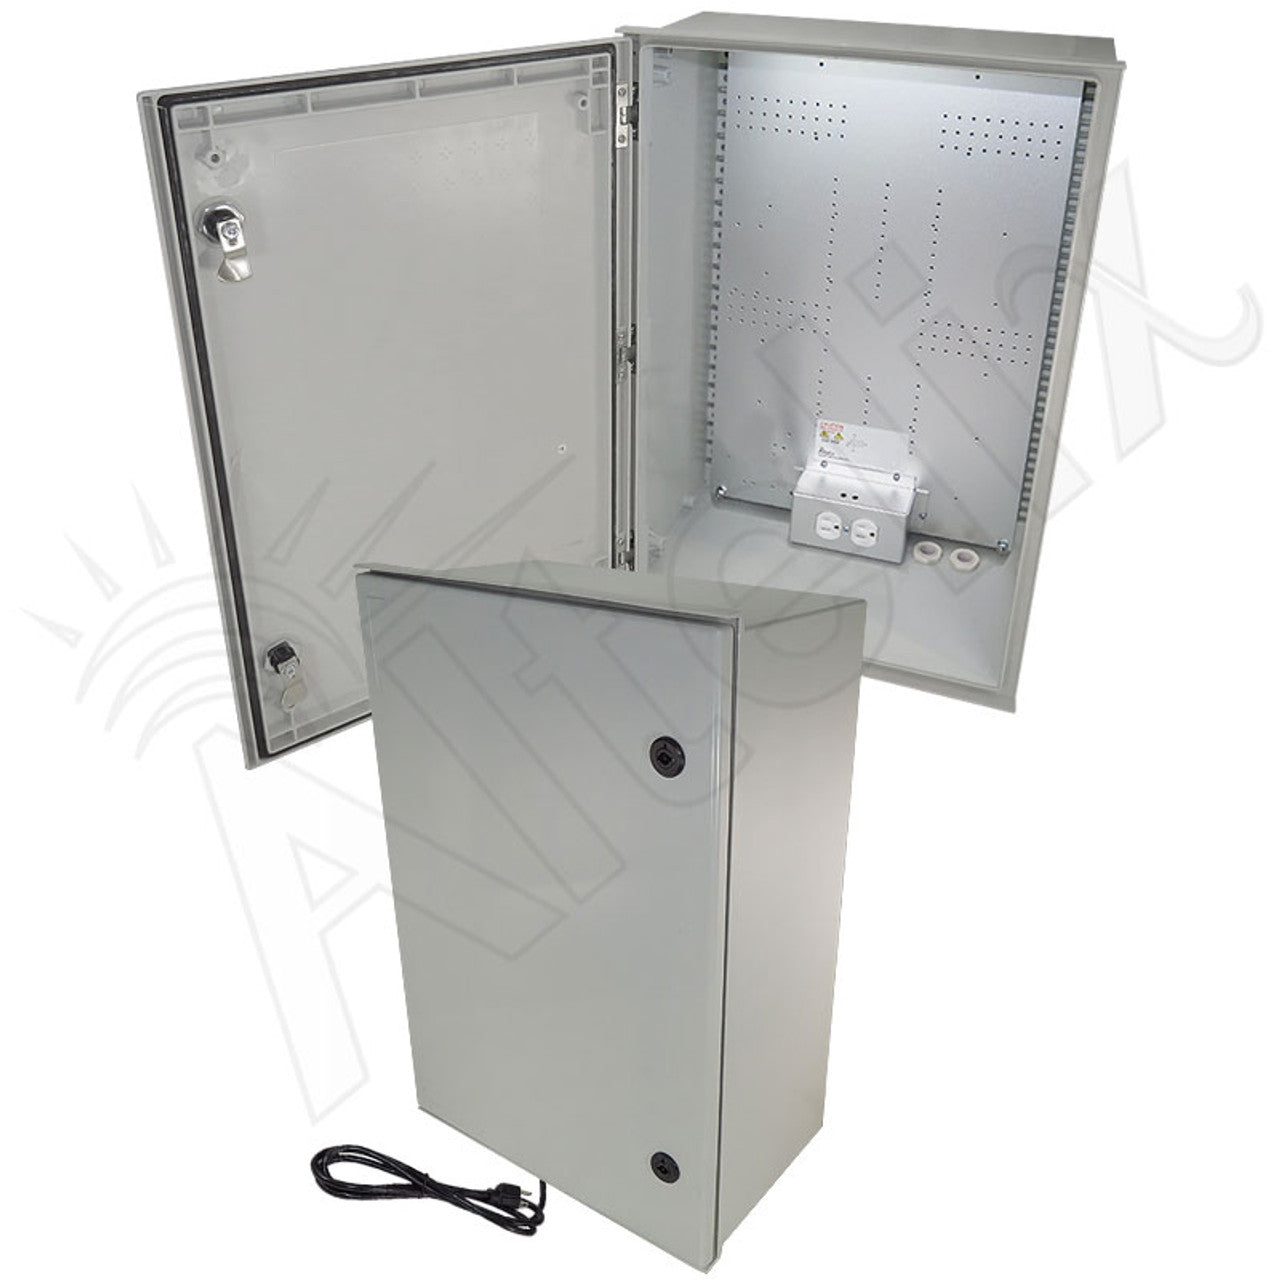 Altelix NEMA 4X Heated Fiberglass Weatherproof Enclosure with Equipment Mounting Plate, 120 VAC Outlets & Power Cord